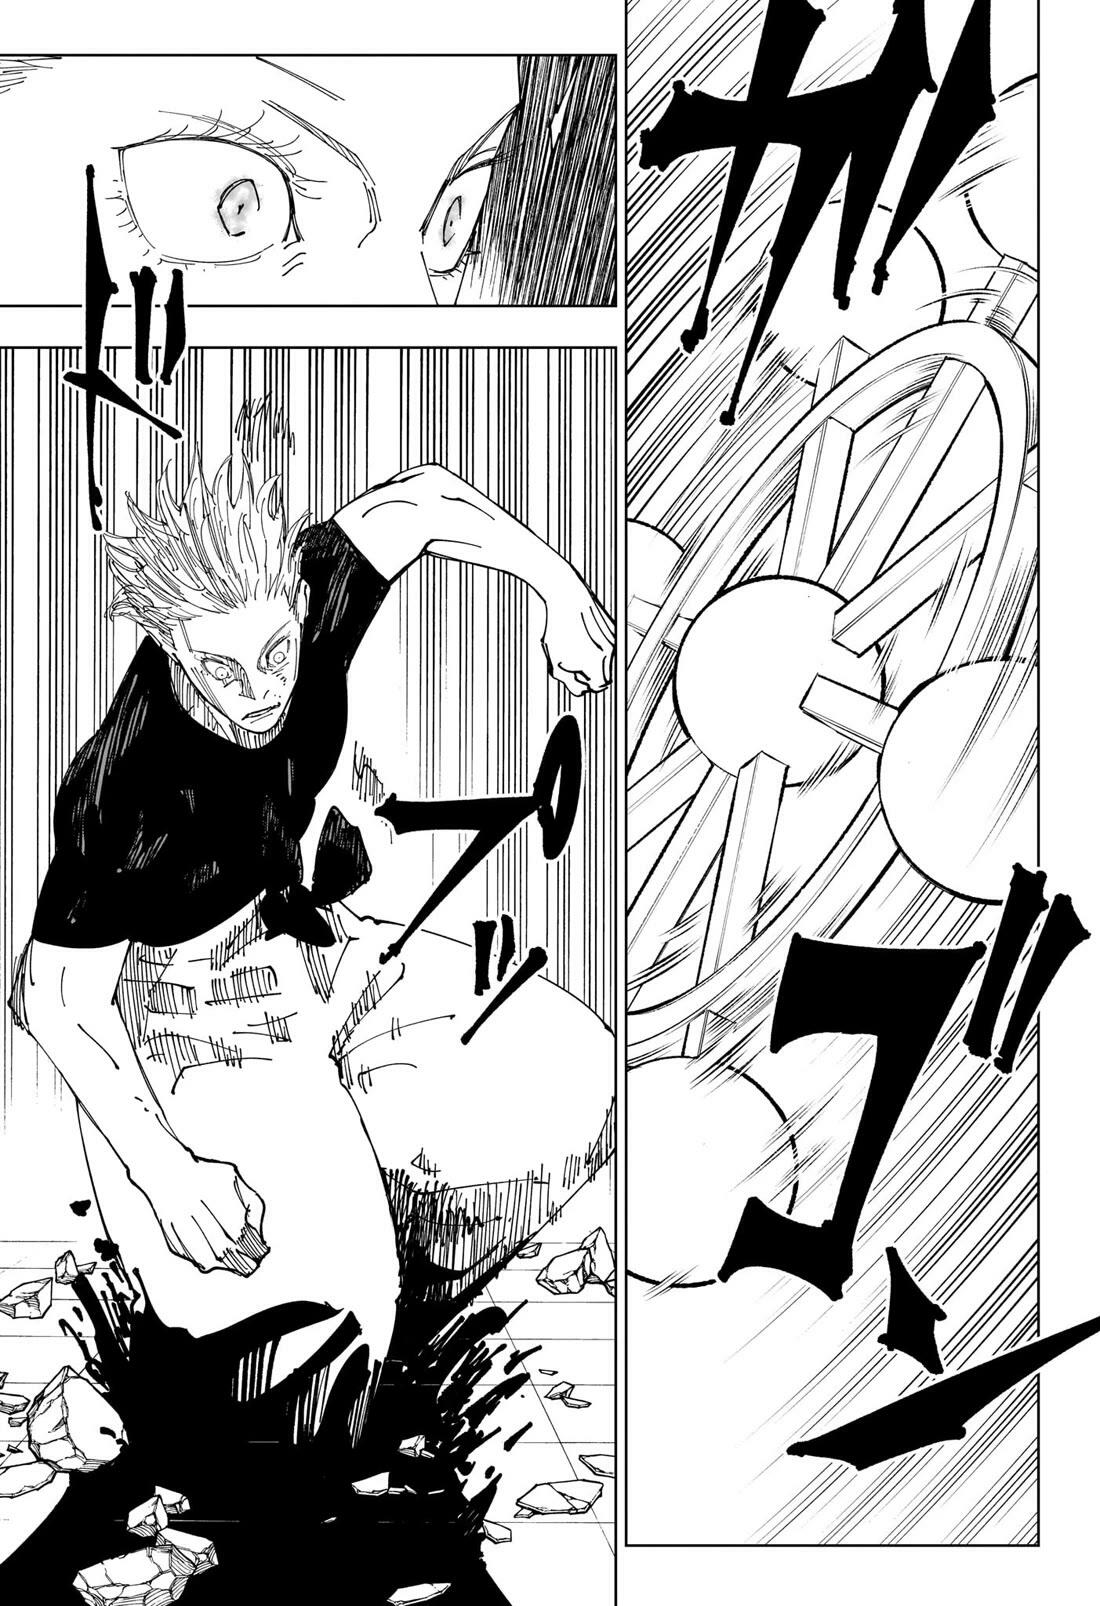 Jujutsu Kaisen Chapter 232: The Decisive Battle In The Uninhabited, Demon-Infested Shinjuku ⑩ page 17 - Mangakakalot